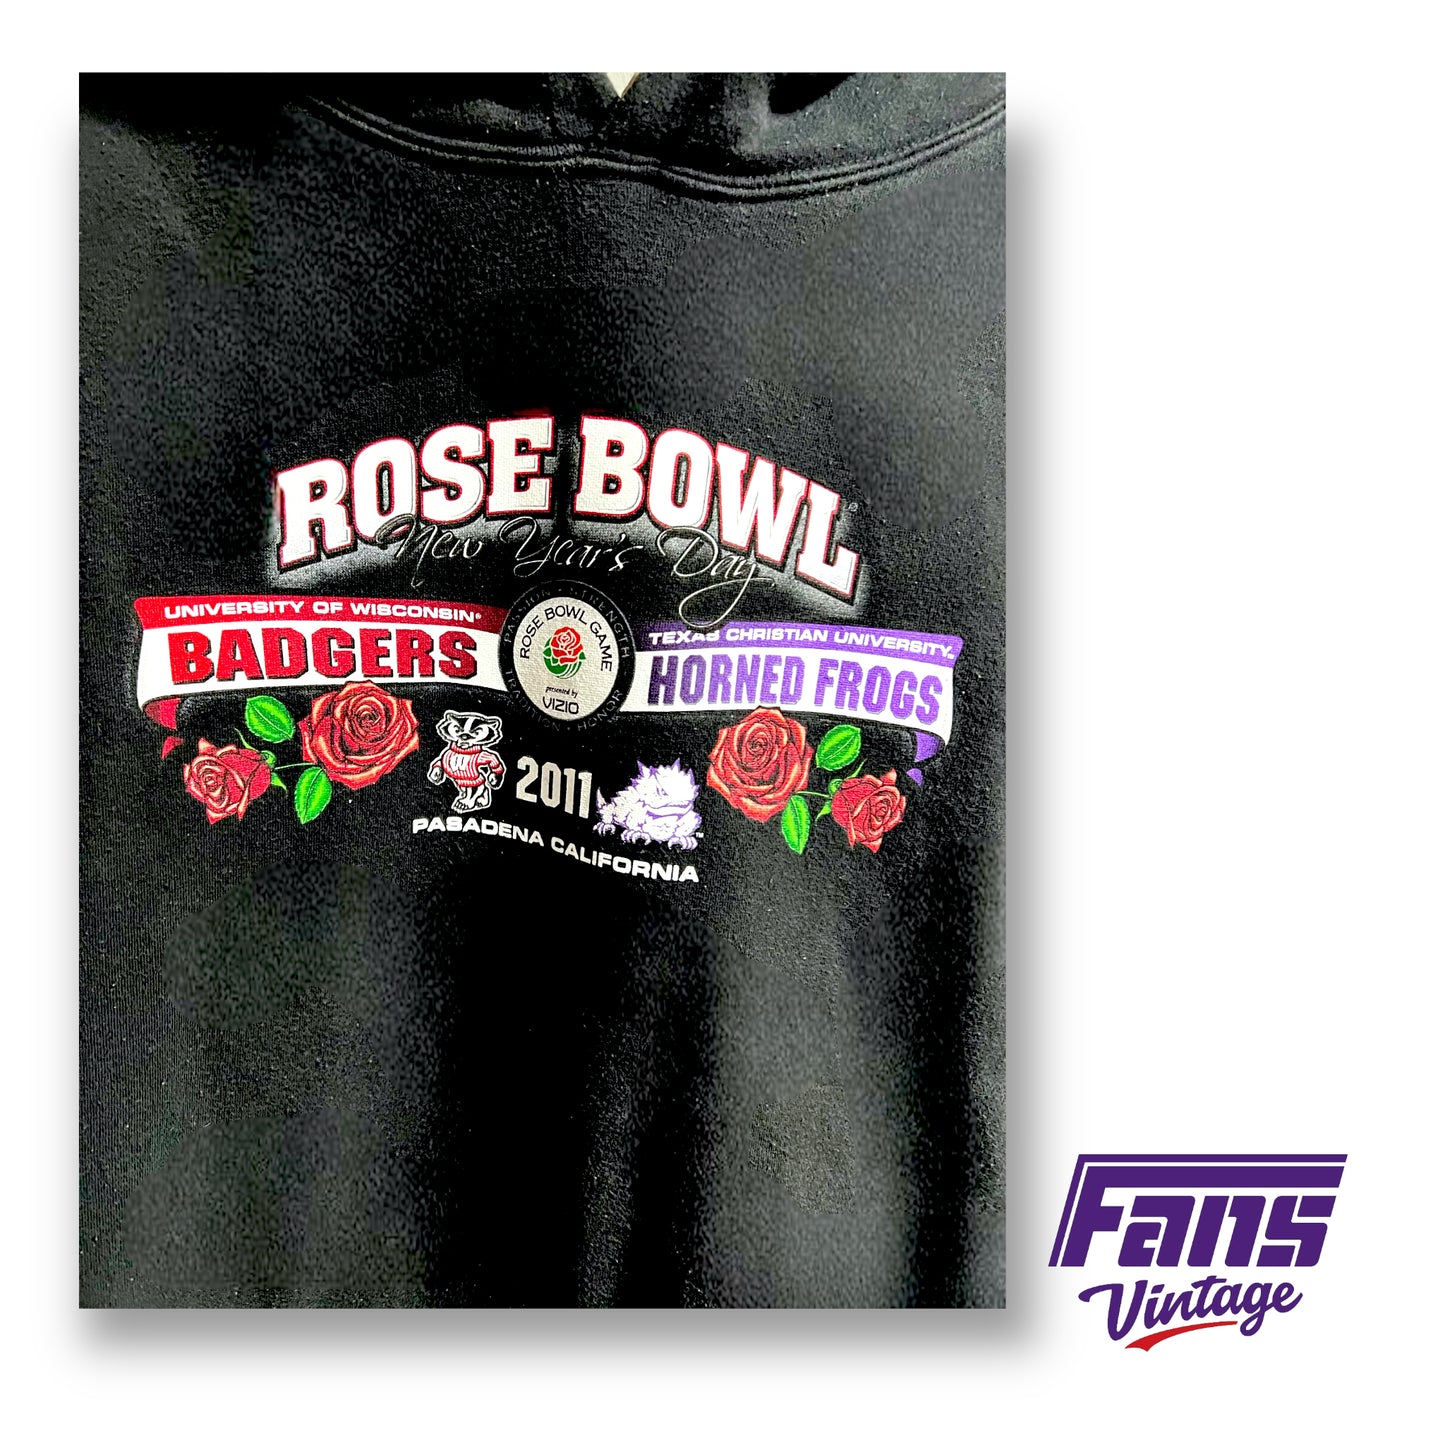 TCU Rose Bowl hoodie - Insane GIANT Graphics!